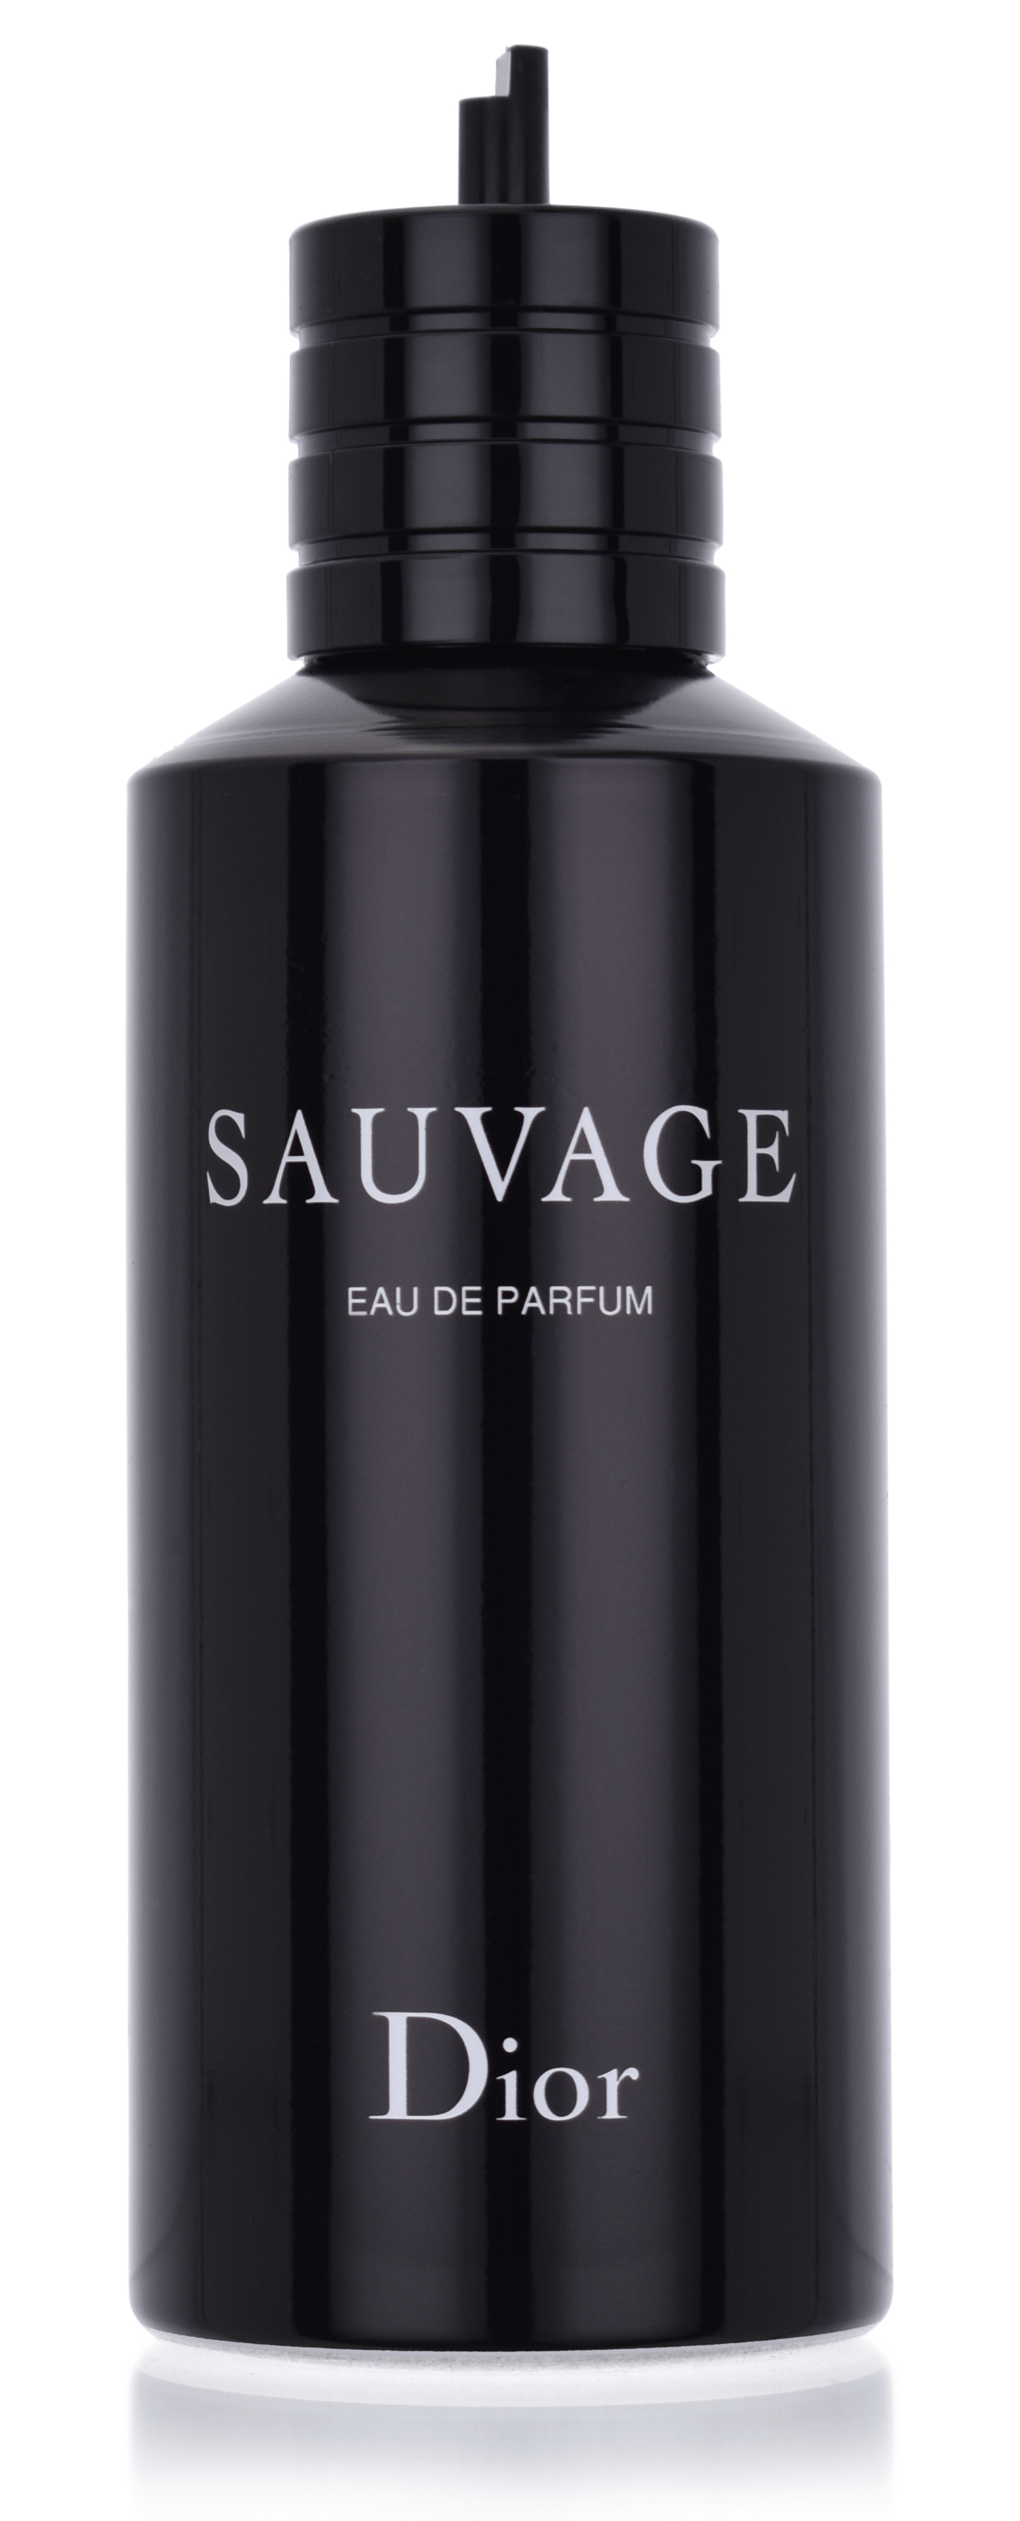 Dior Sauvage 300 ml Eau de Parfum Refill